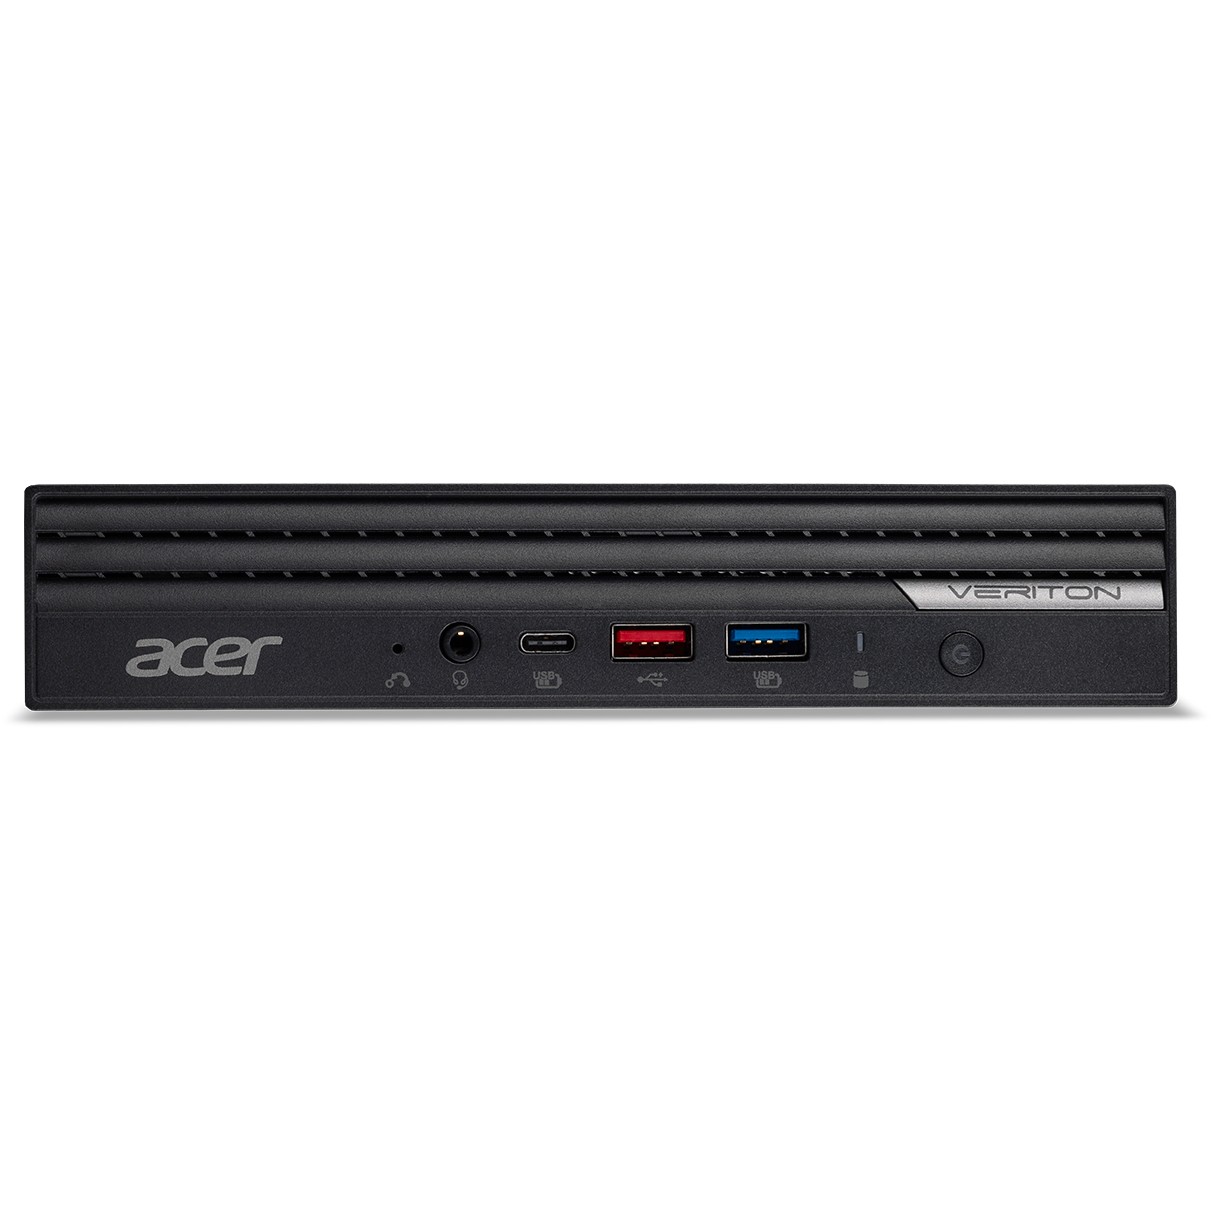 Acer DT.VX4EG.003, Marken PCs, Acer Veriton N N4690GT  (BILD5)